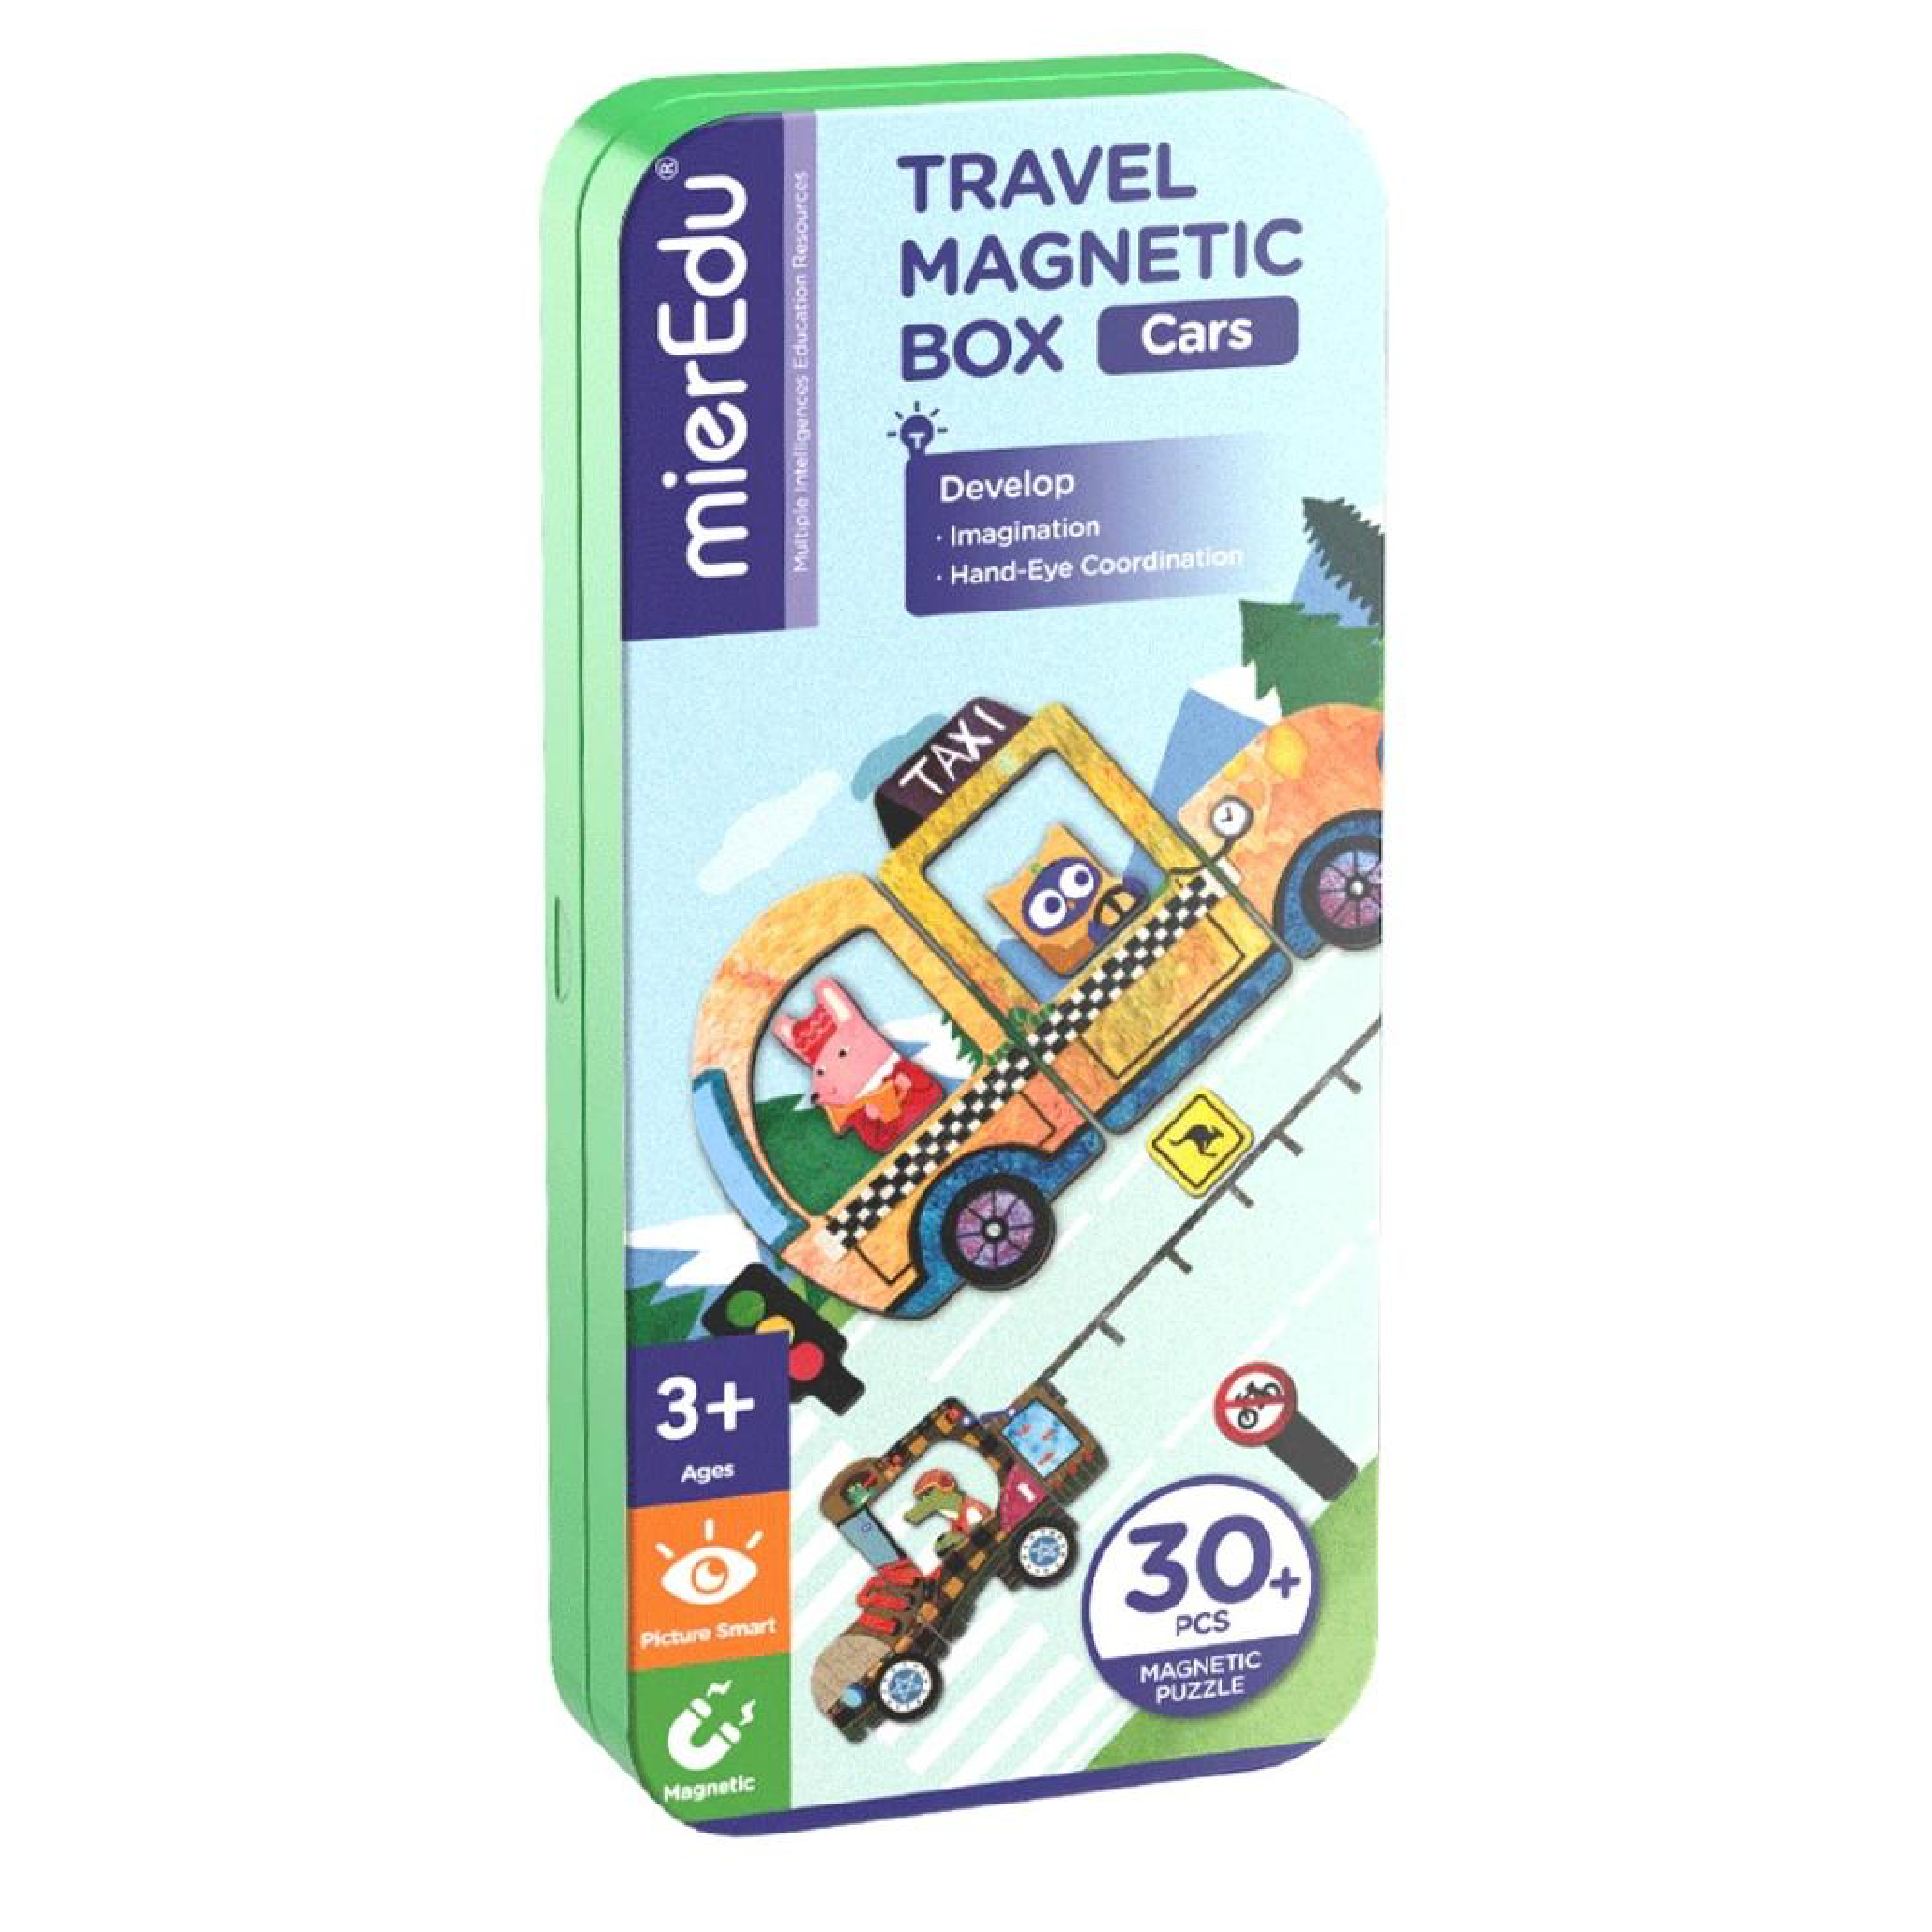 mierEdu | Magnetic Travel Box - Cars